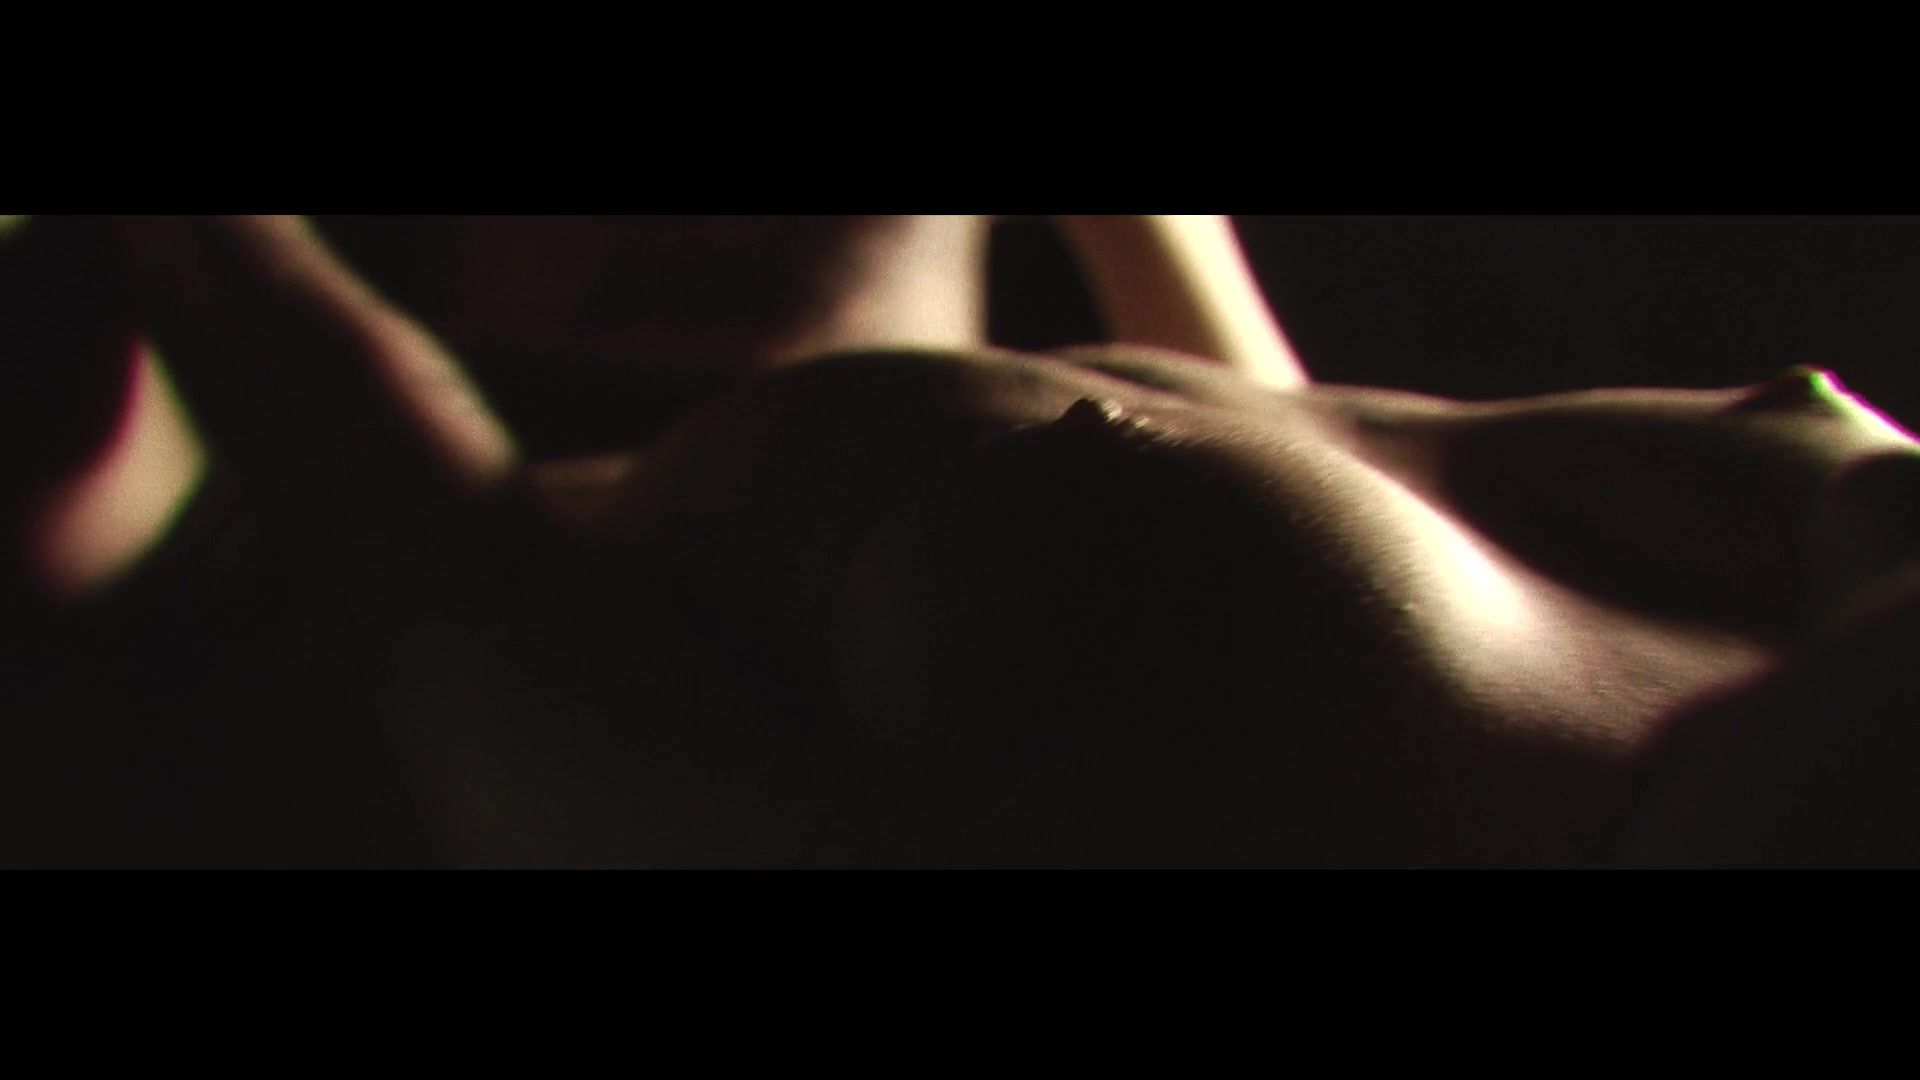 Nxgx Nude Art Video - 2 Sexual CloseUp Fake Tits